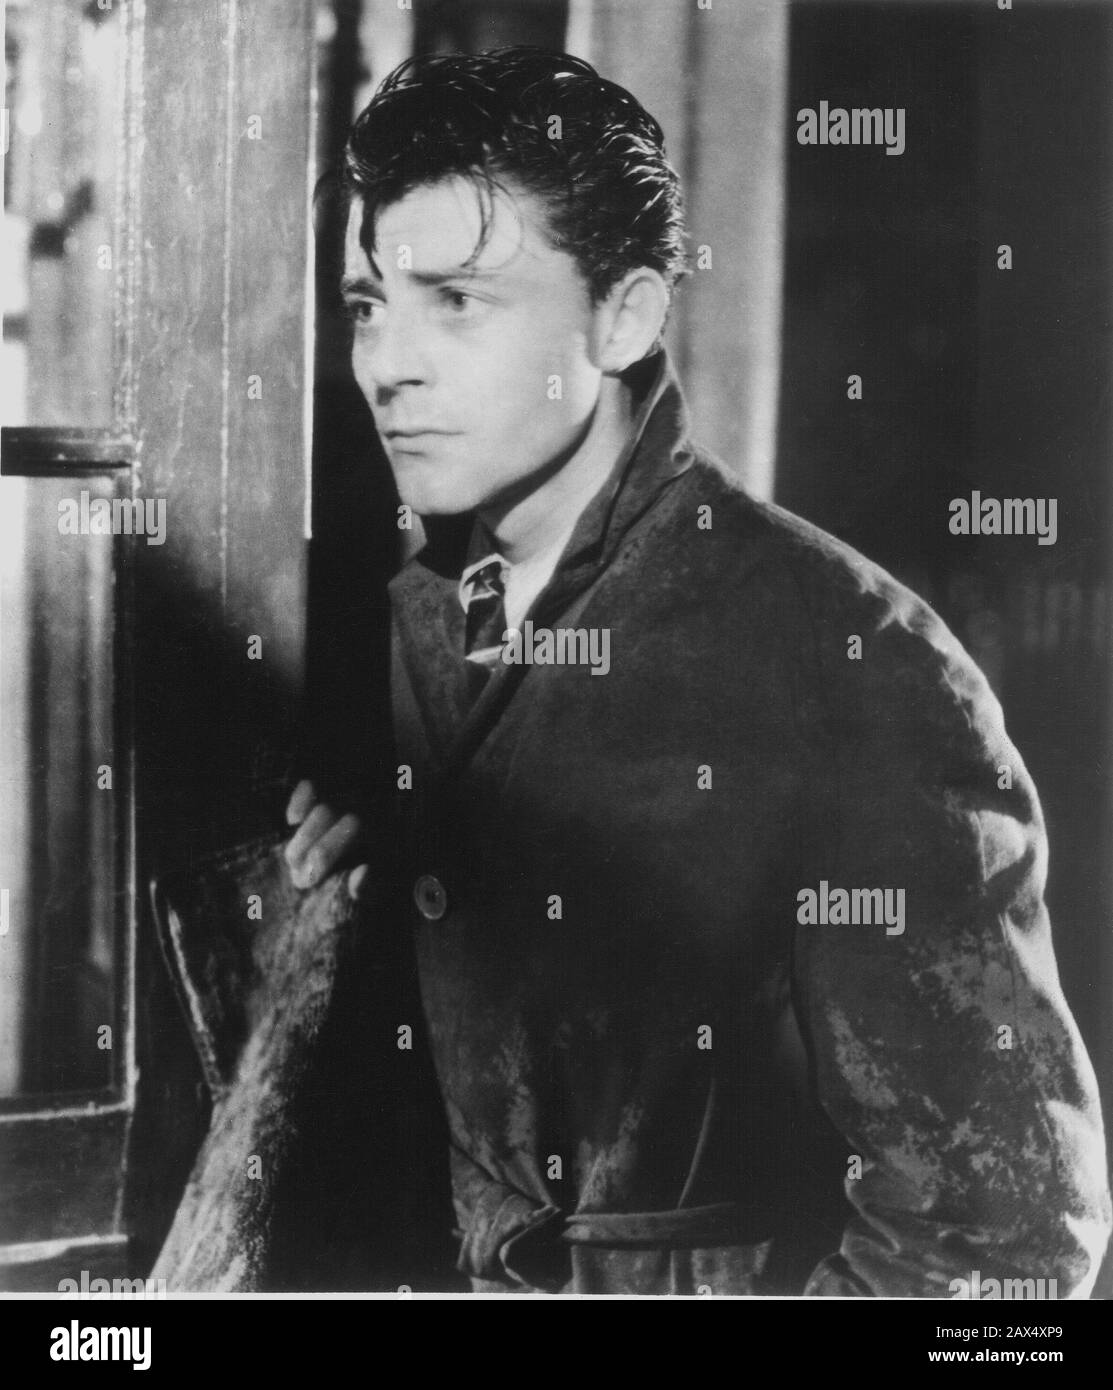 The french movie actor GERARD PHILIPE (   1922 -  1959 )  in LE DIABLE AU CORPS ( Devil in the Flesh -  Il diavolo in corpo ) by Claude Autant-Lara , from a novel by Raymond Radiguet    MOVIE - CINEMA - francese - attore - FILM - impermeabile - raincoat - cravatta - tie - tristezza - gelosia - jealousy - geloso - jealous - sad - grieved - gloomy - distressing - lover - innamorato - amore - love - rain - pioggia  ----  Archivio GBB Stock Photo